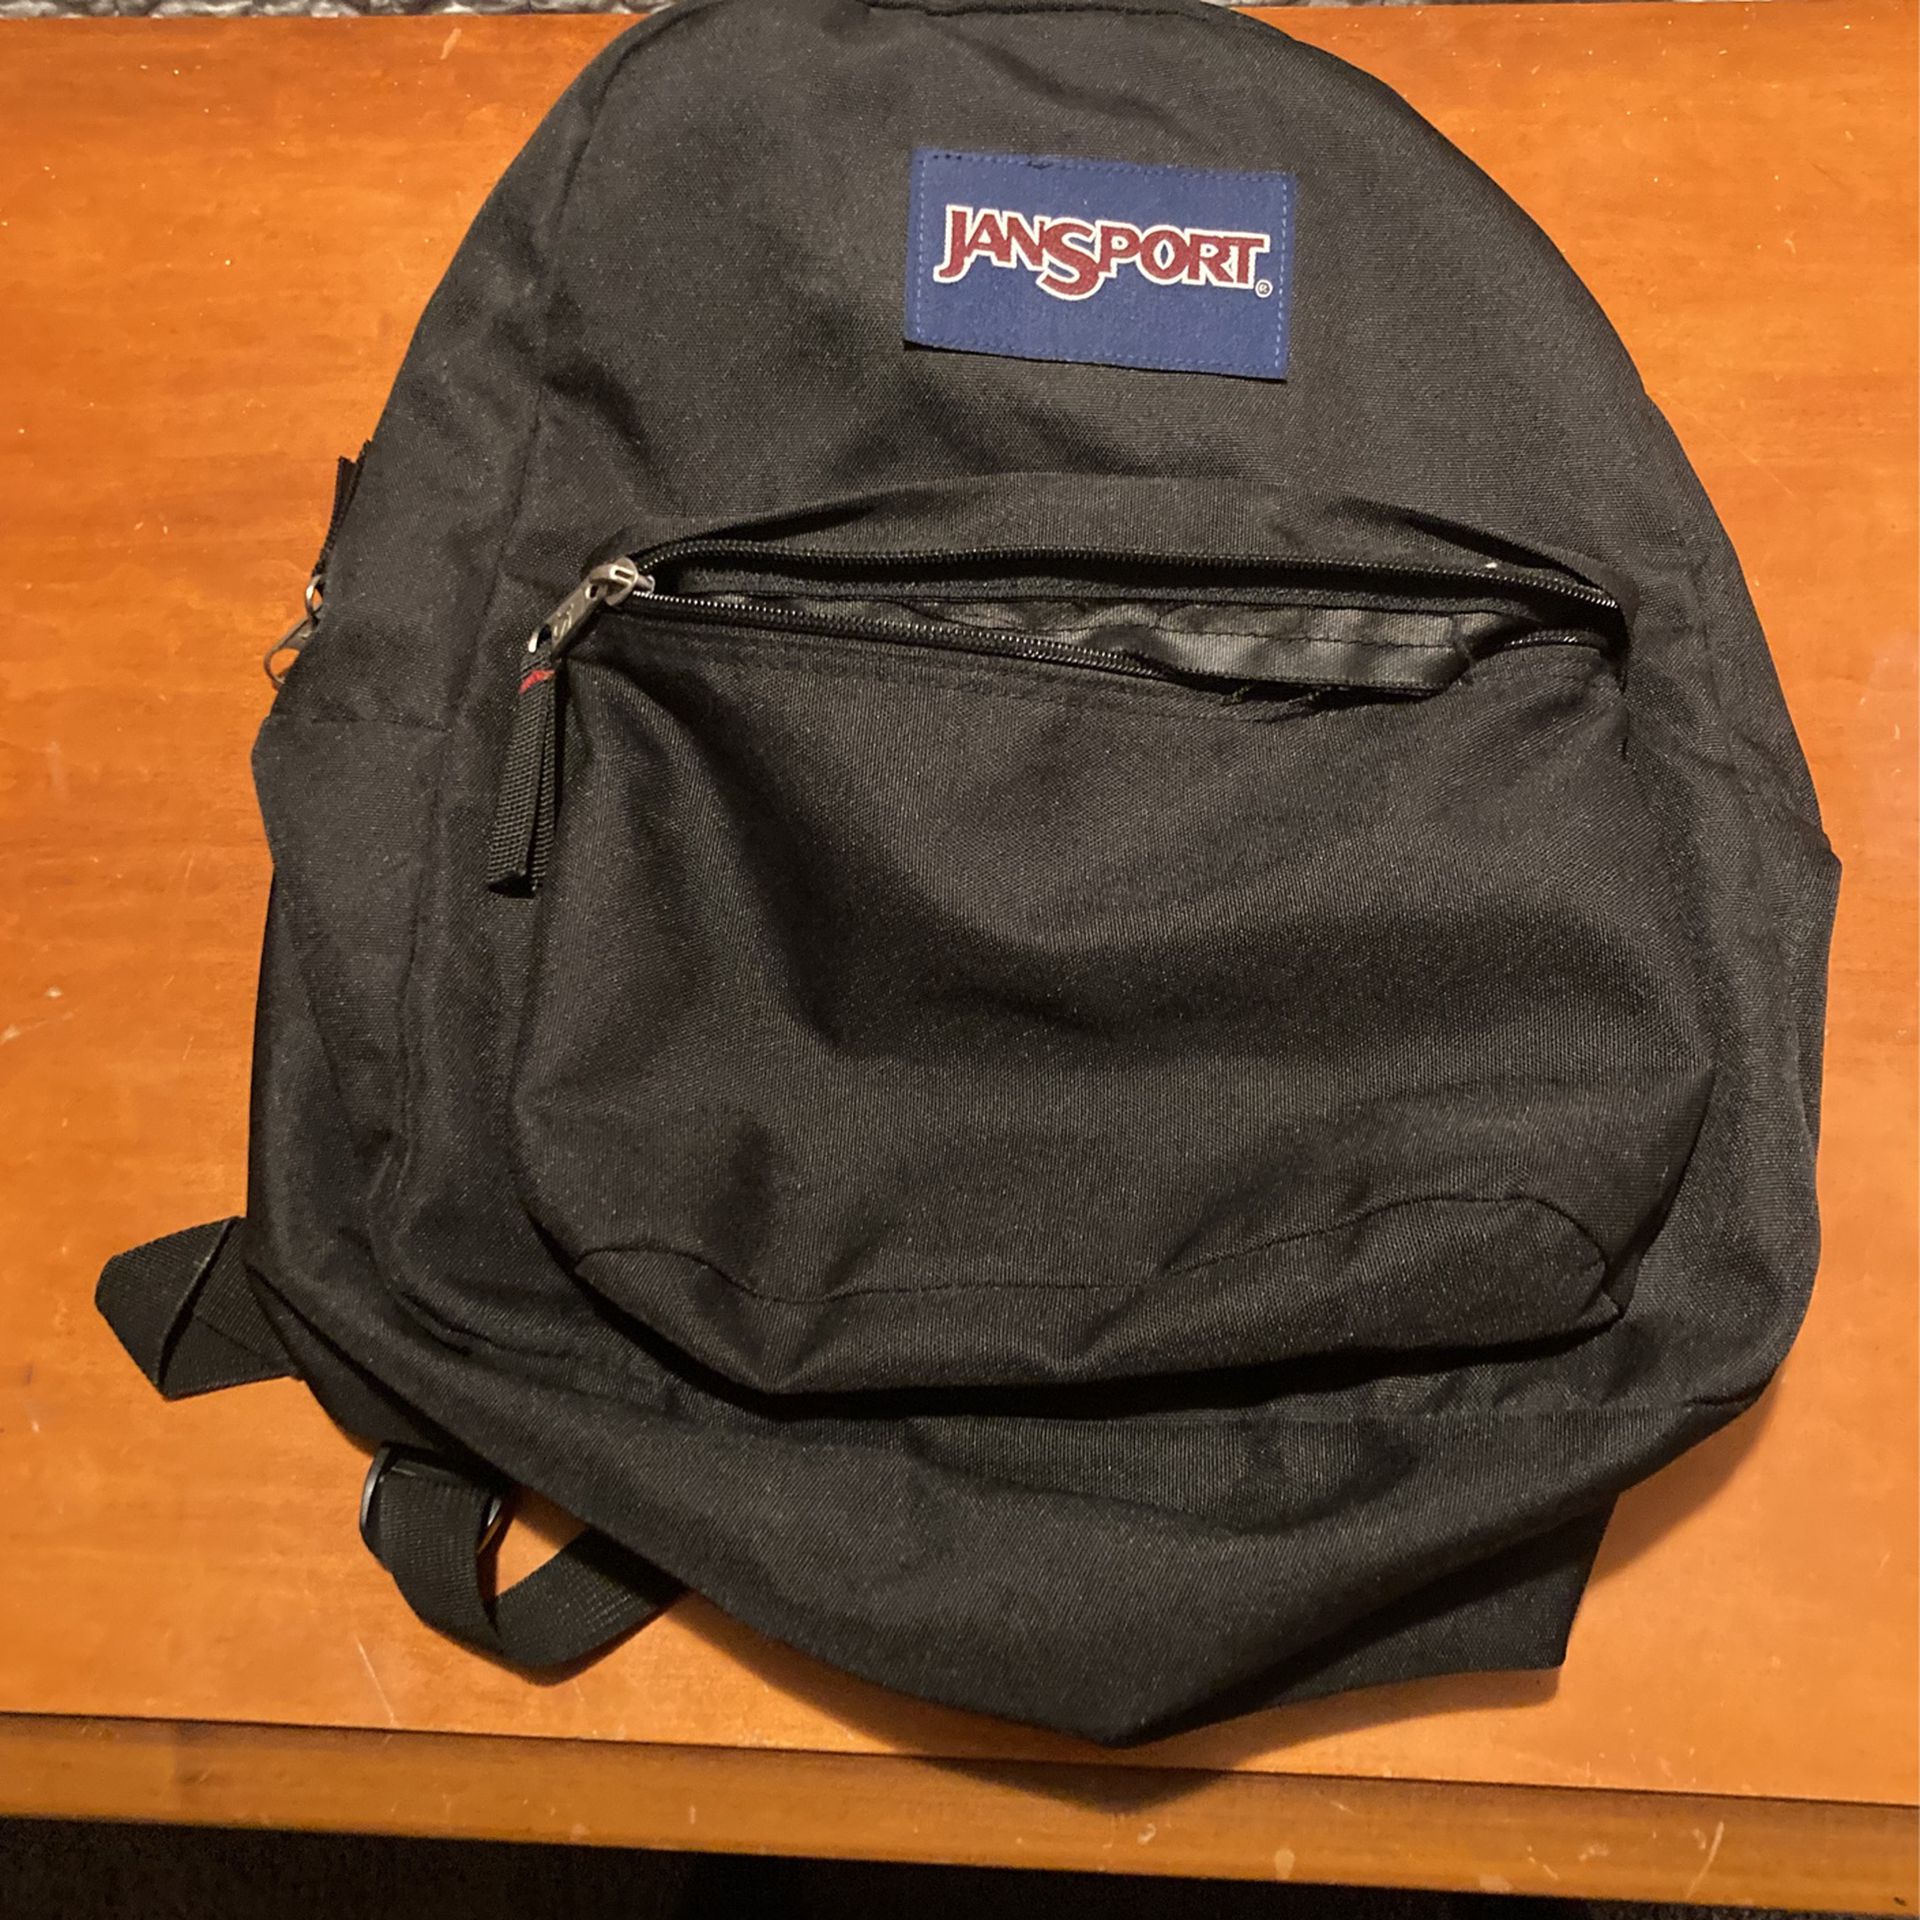 Original Jan sport backpack